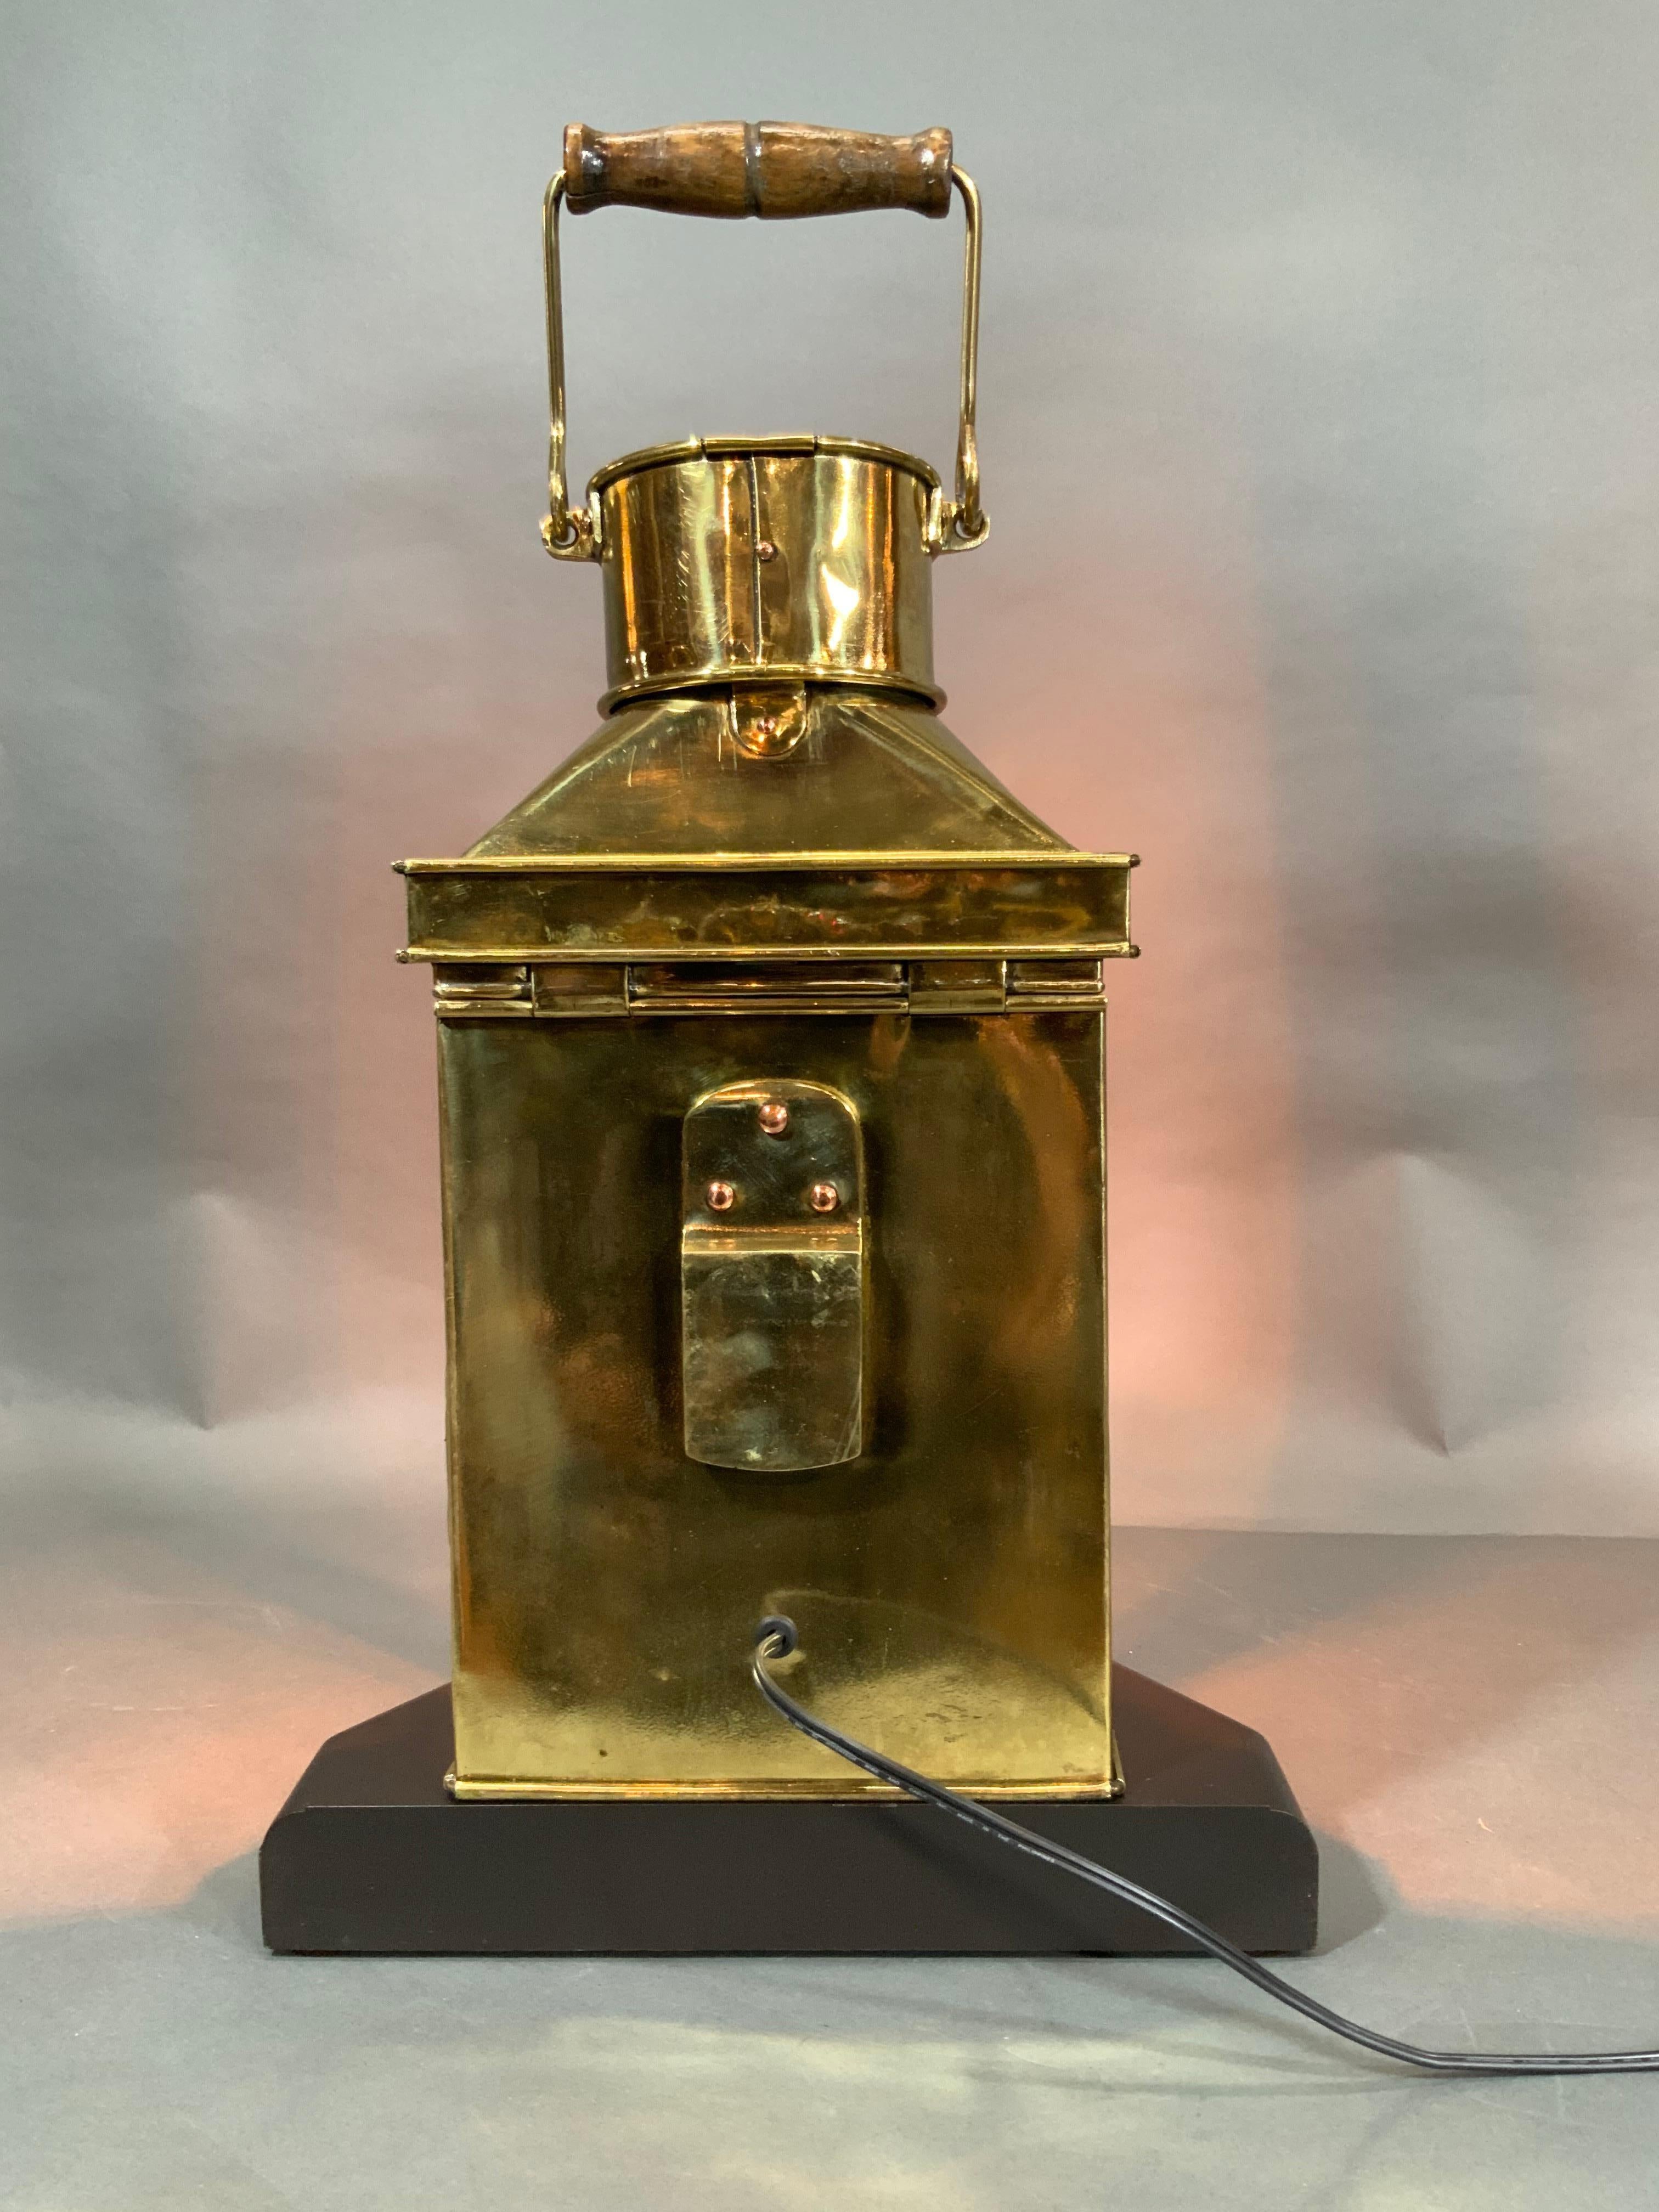 1914 Brass Ship's Cabin Lantern from Bulpitt of Birmingham England 1